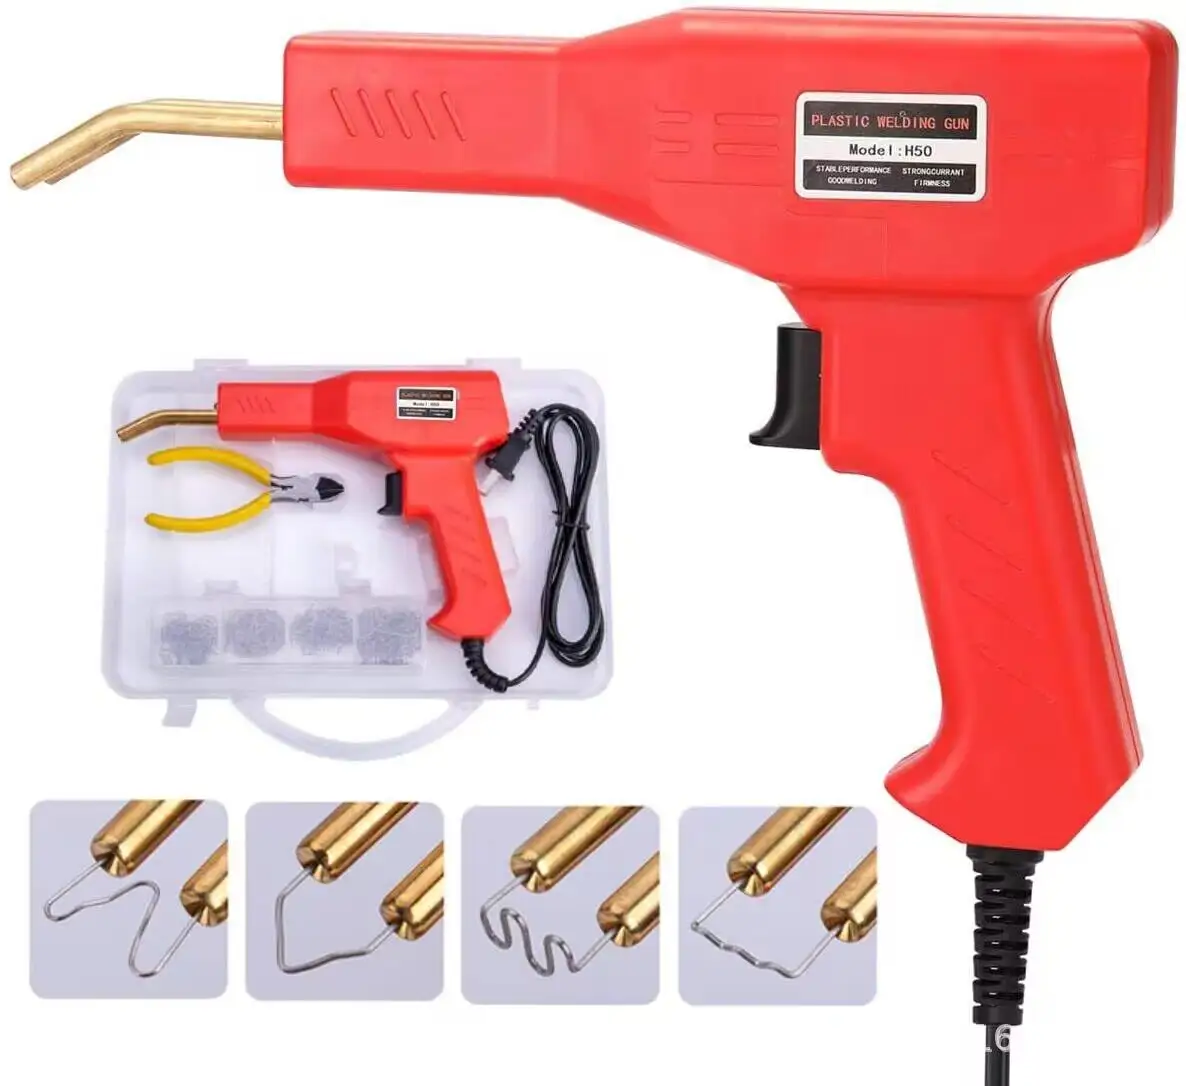 Plastic Welder Kit with Hot Stapler Gun for Car Bumper Surface Repair Plastic welding gun